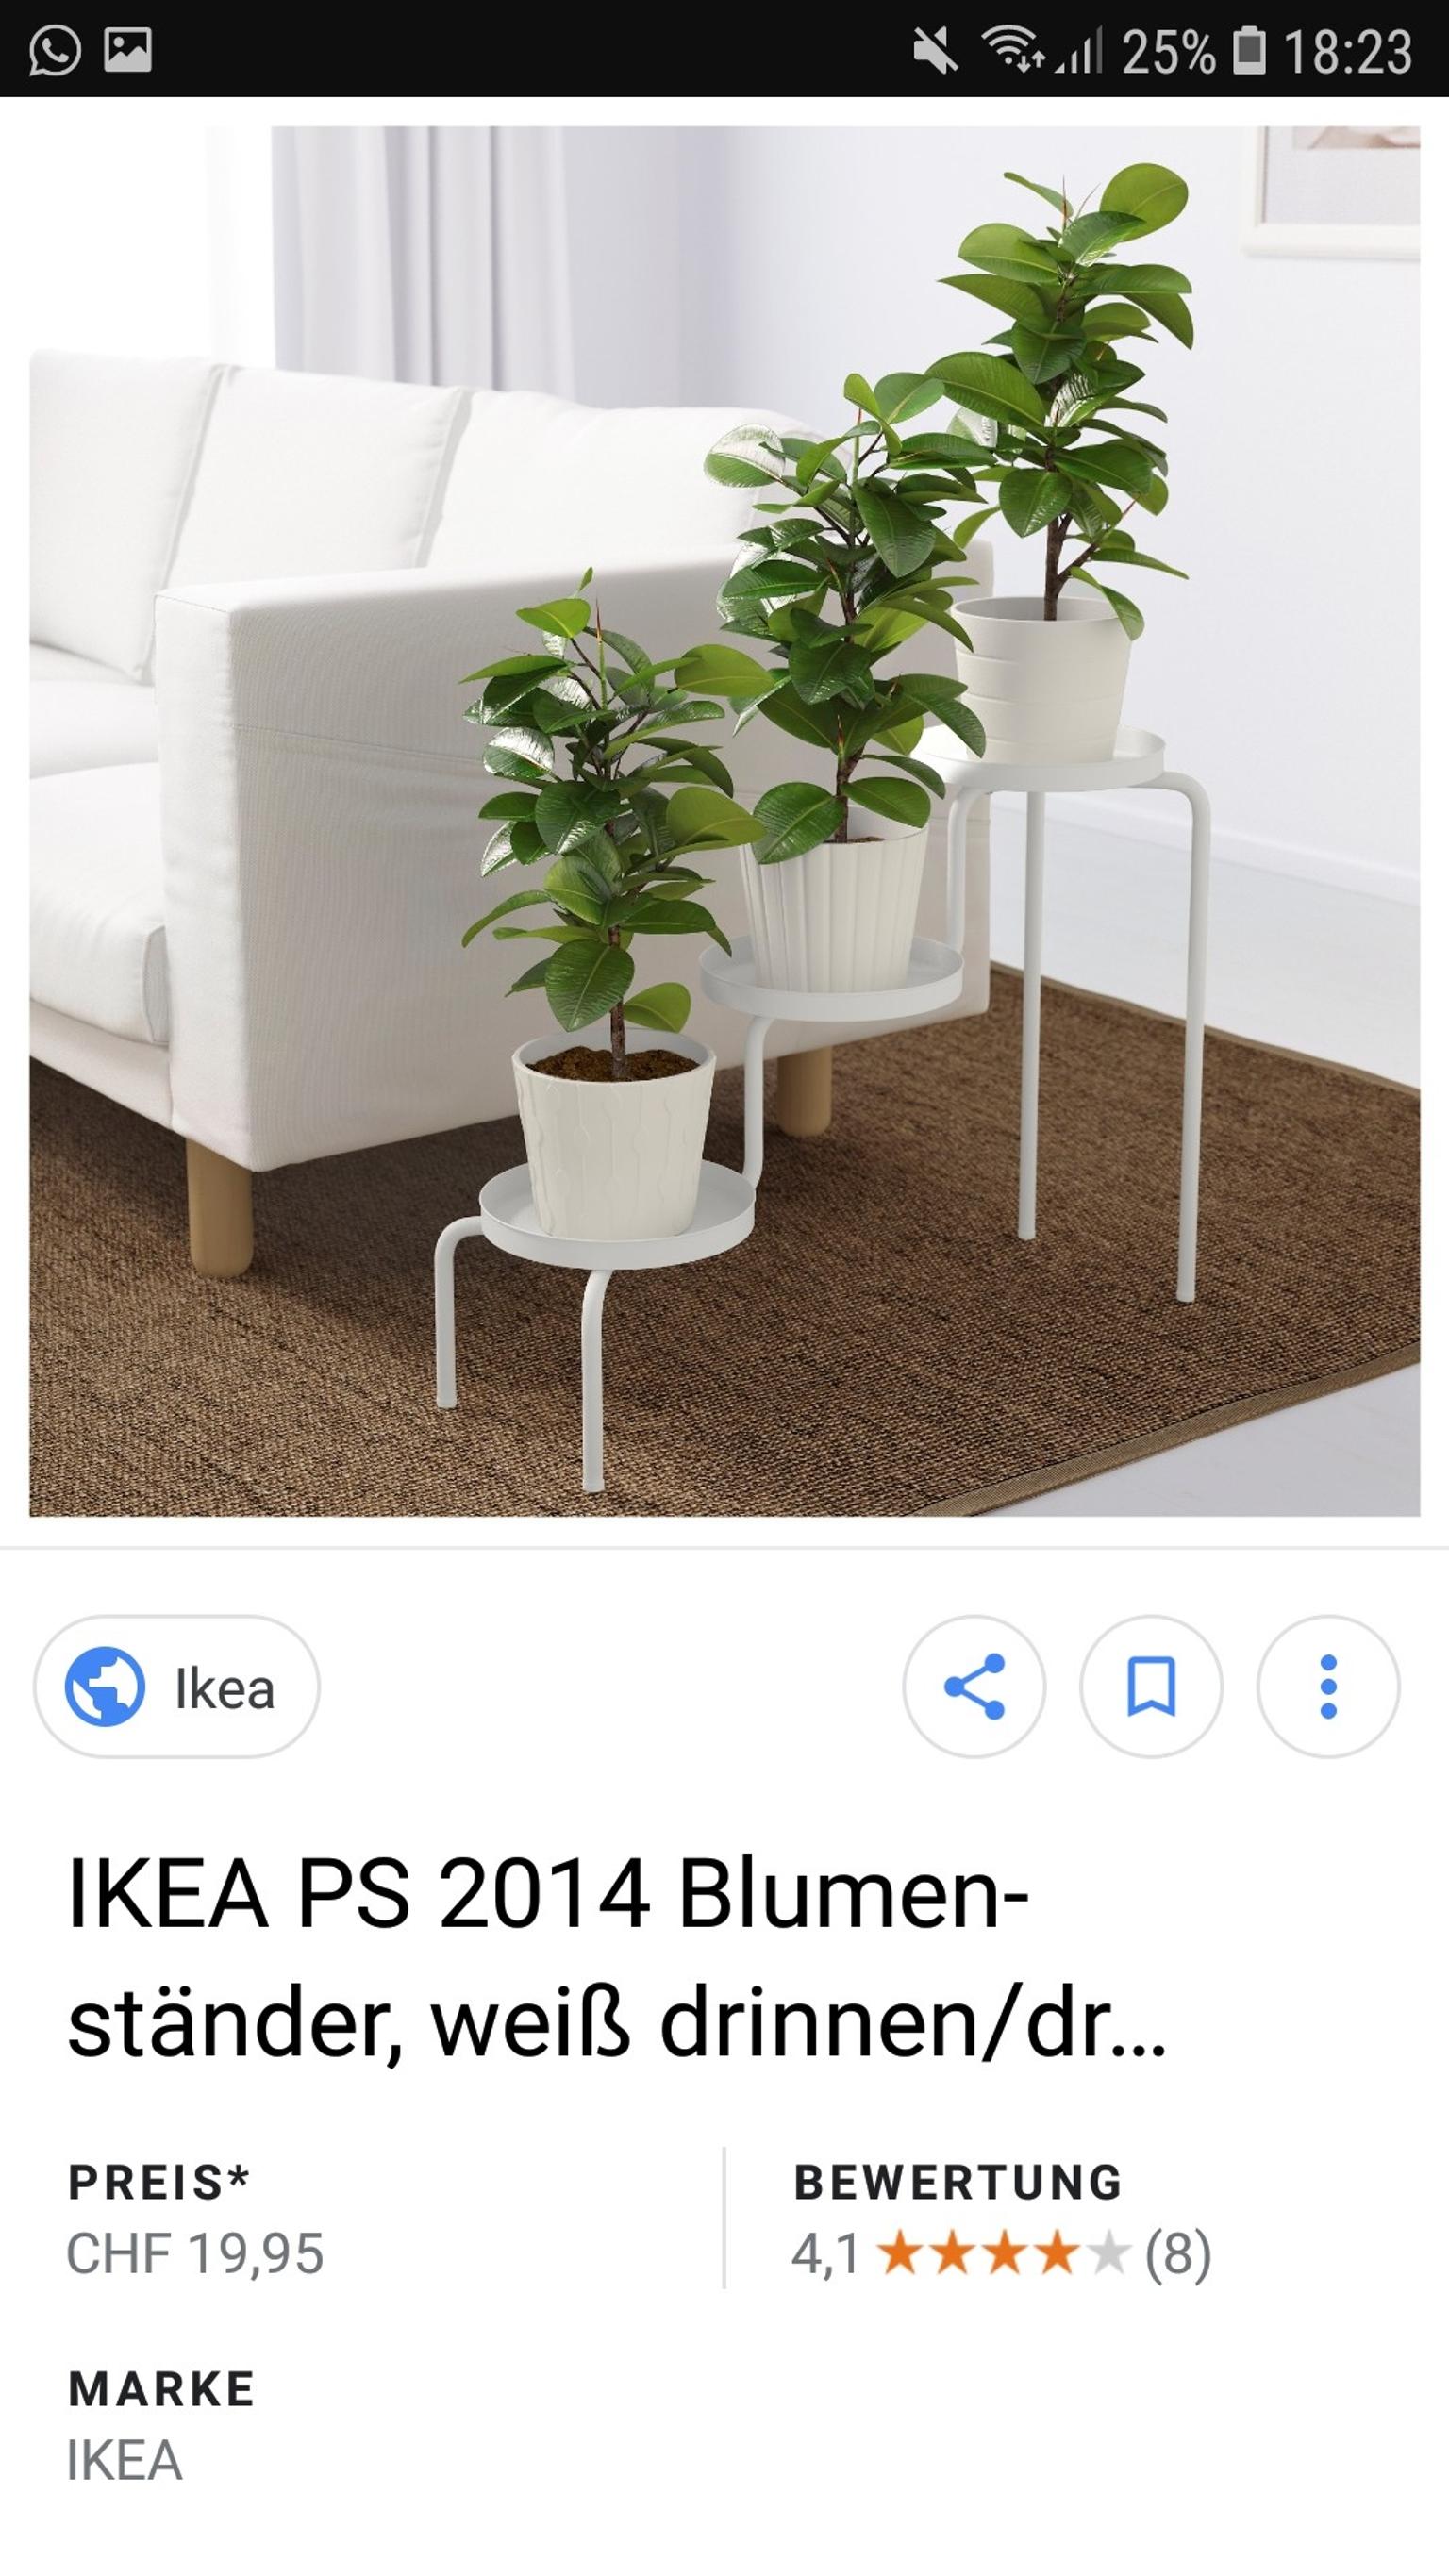 Blumentreppe Blumenregal Weiss Ikea In 6850 Dornbirn For 13 00 For Sale Shpock